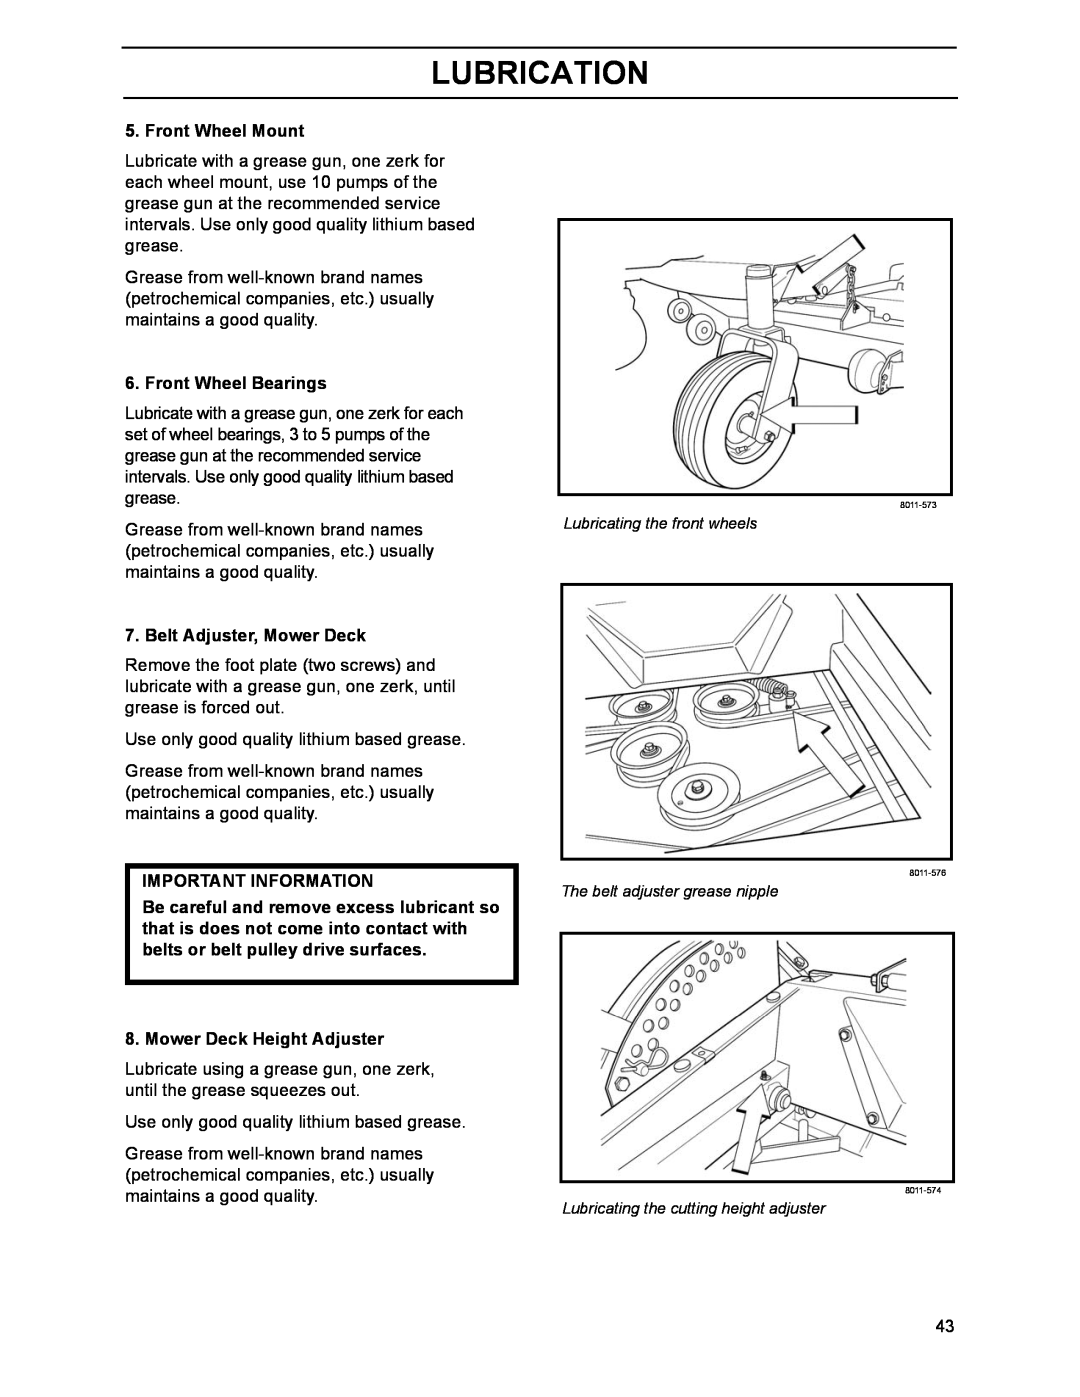 Husqvarna BZ7234D Lubrication, Front Wheel Mount, Front Wheel Bearings, Belt Adjuster, Mower Deck, Important Information 